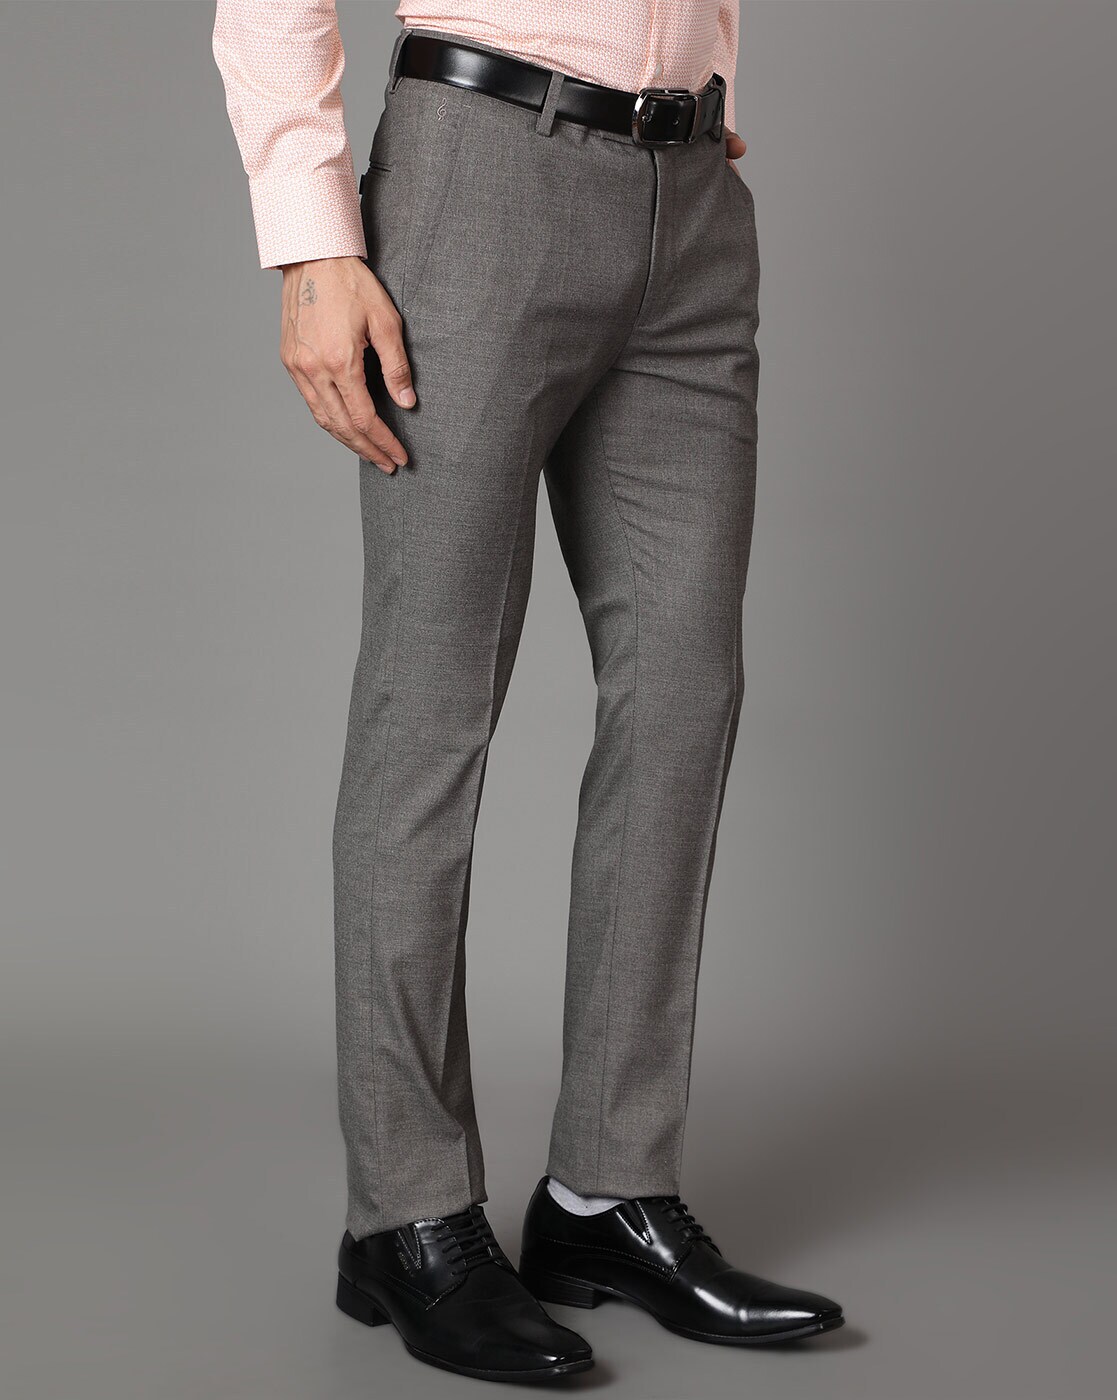 American-elm Men Brown Slim Fit Solid Cotton Formal Trouser at Rs 529.00 |  Narrow Fit Formal Trousers, मैन स्लिम फिट ट्राउजर, पुरुषों के स्लिम फिट  ट्राउजर - Madhuram Enterprises, Noida | ID: 25006164491